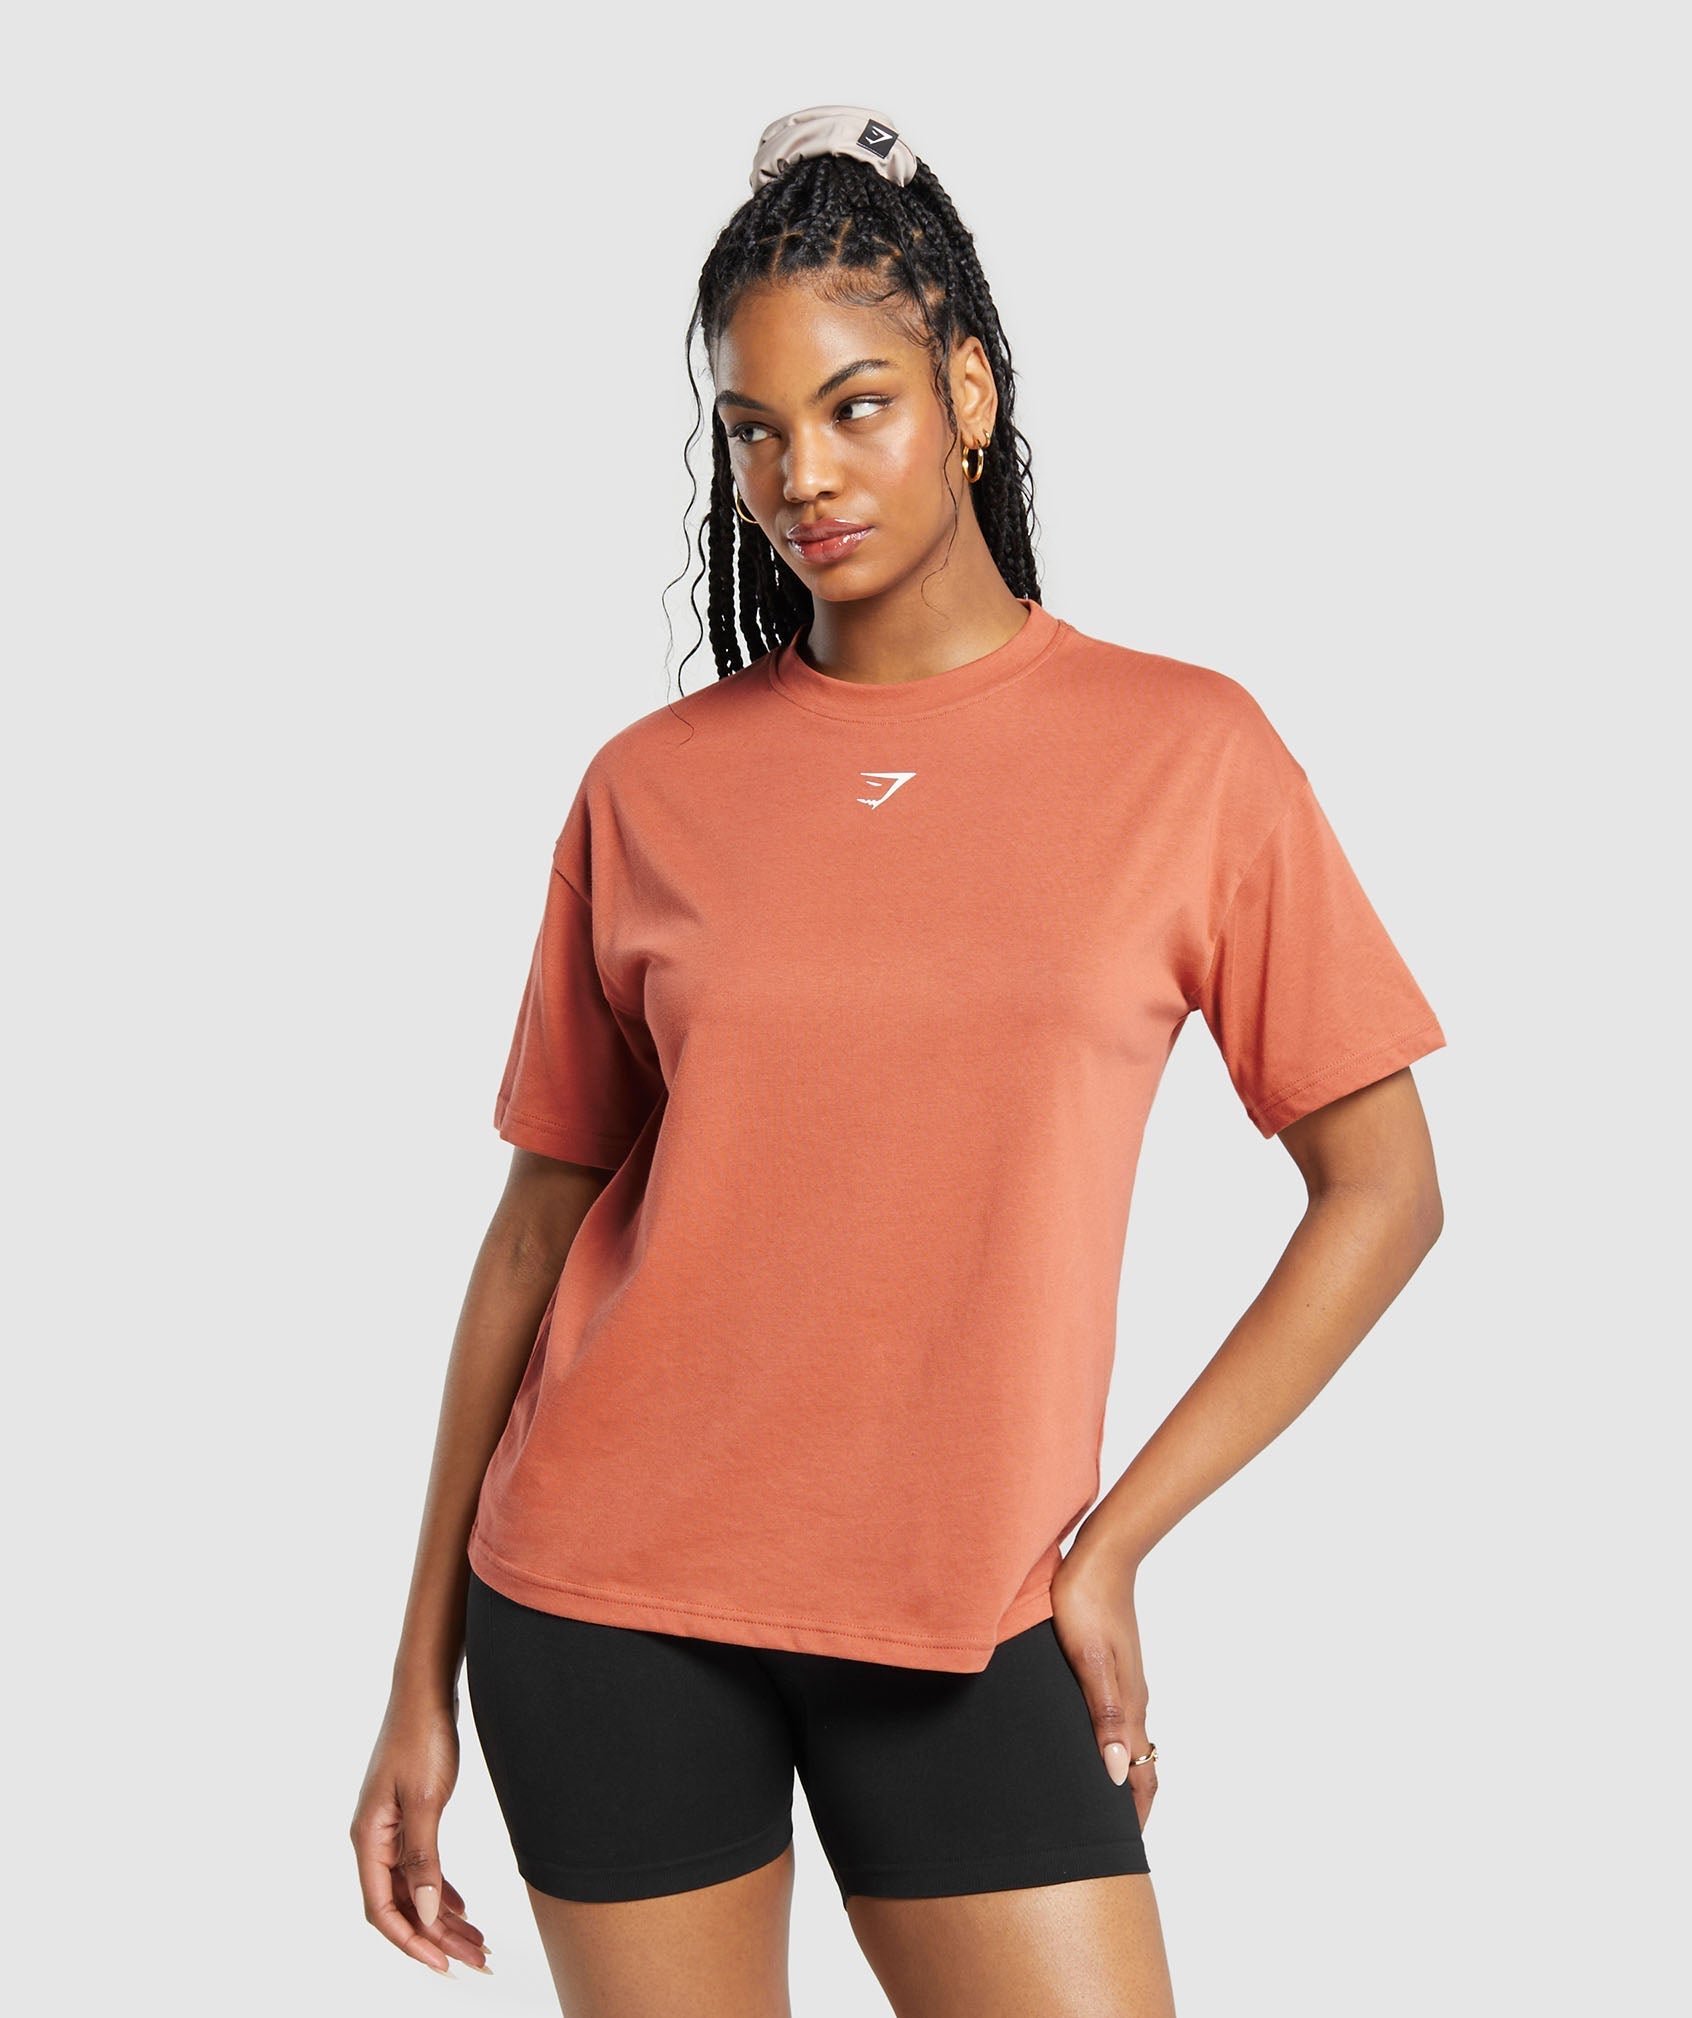 GS Power Oversized T-Shirt in Terracotta Orange - view 2